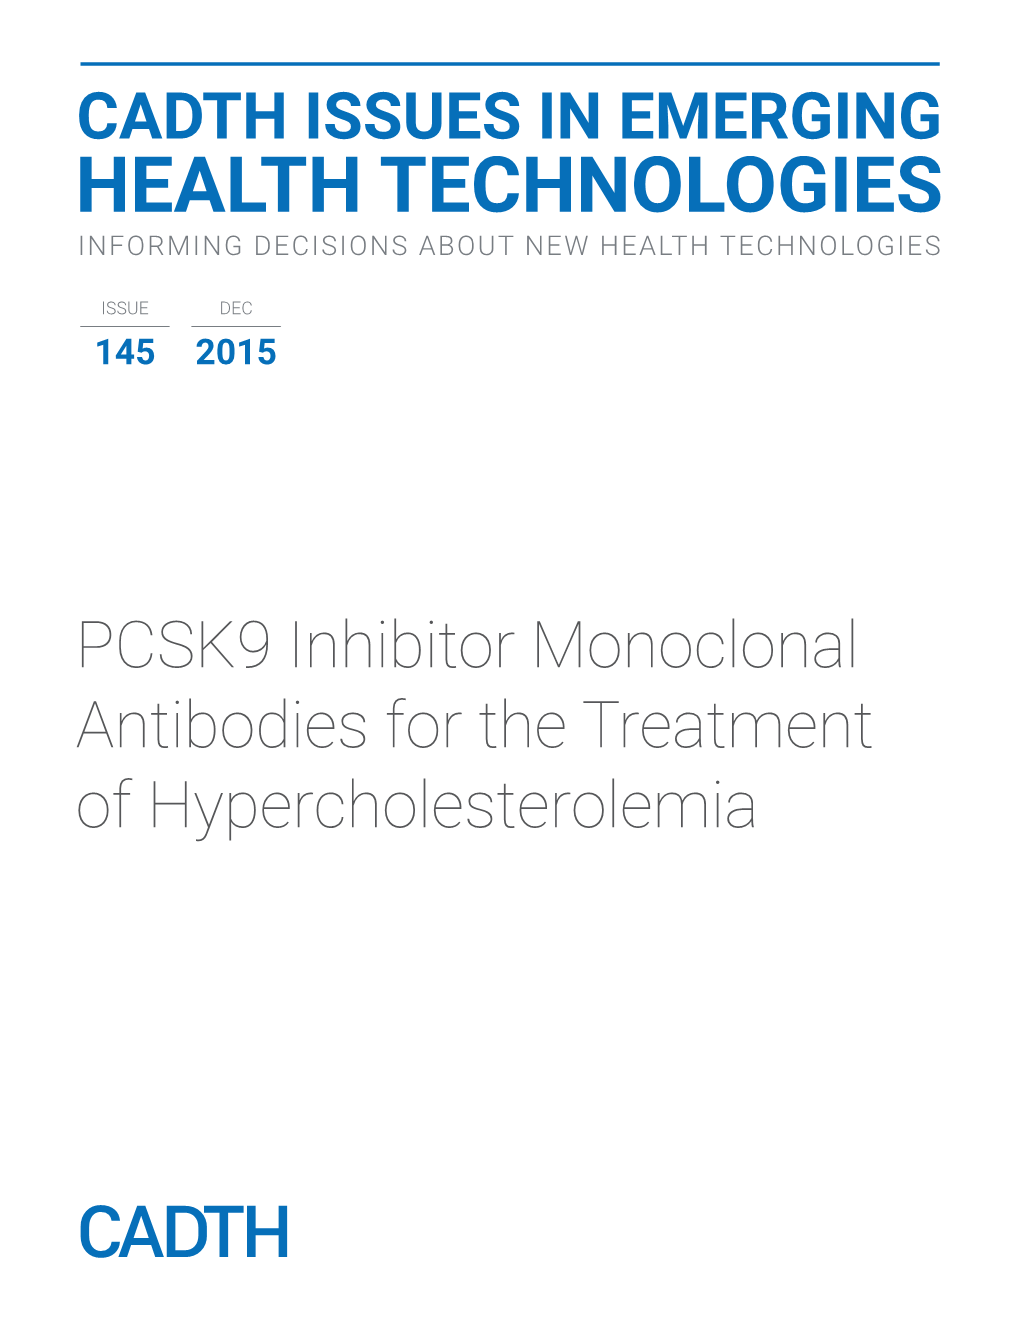 PCSK9 Inhibitor Monoclonal Antibodies for the Treatment of Hypercholesterolemia Authors: Sarah Ndegwa, Michel Boucher, and Monika Mierzwinski-Urban